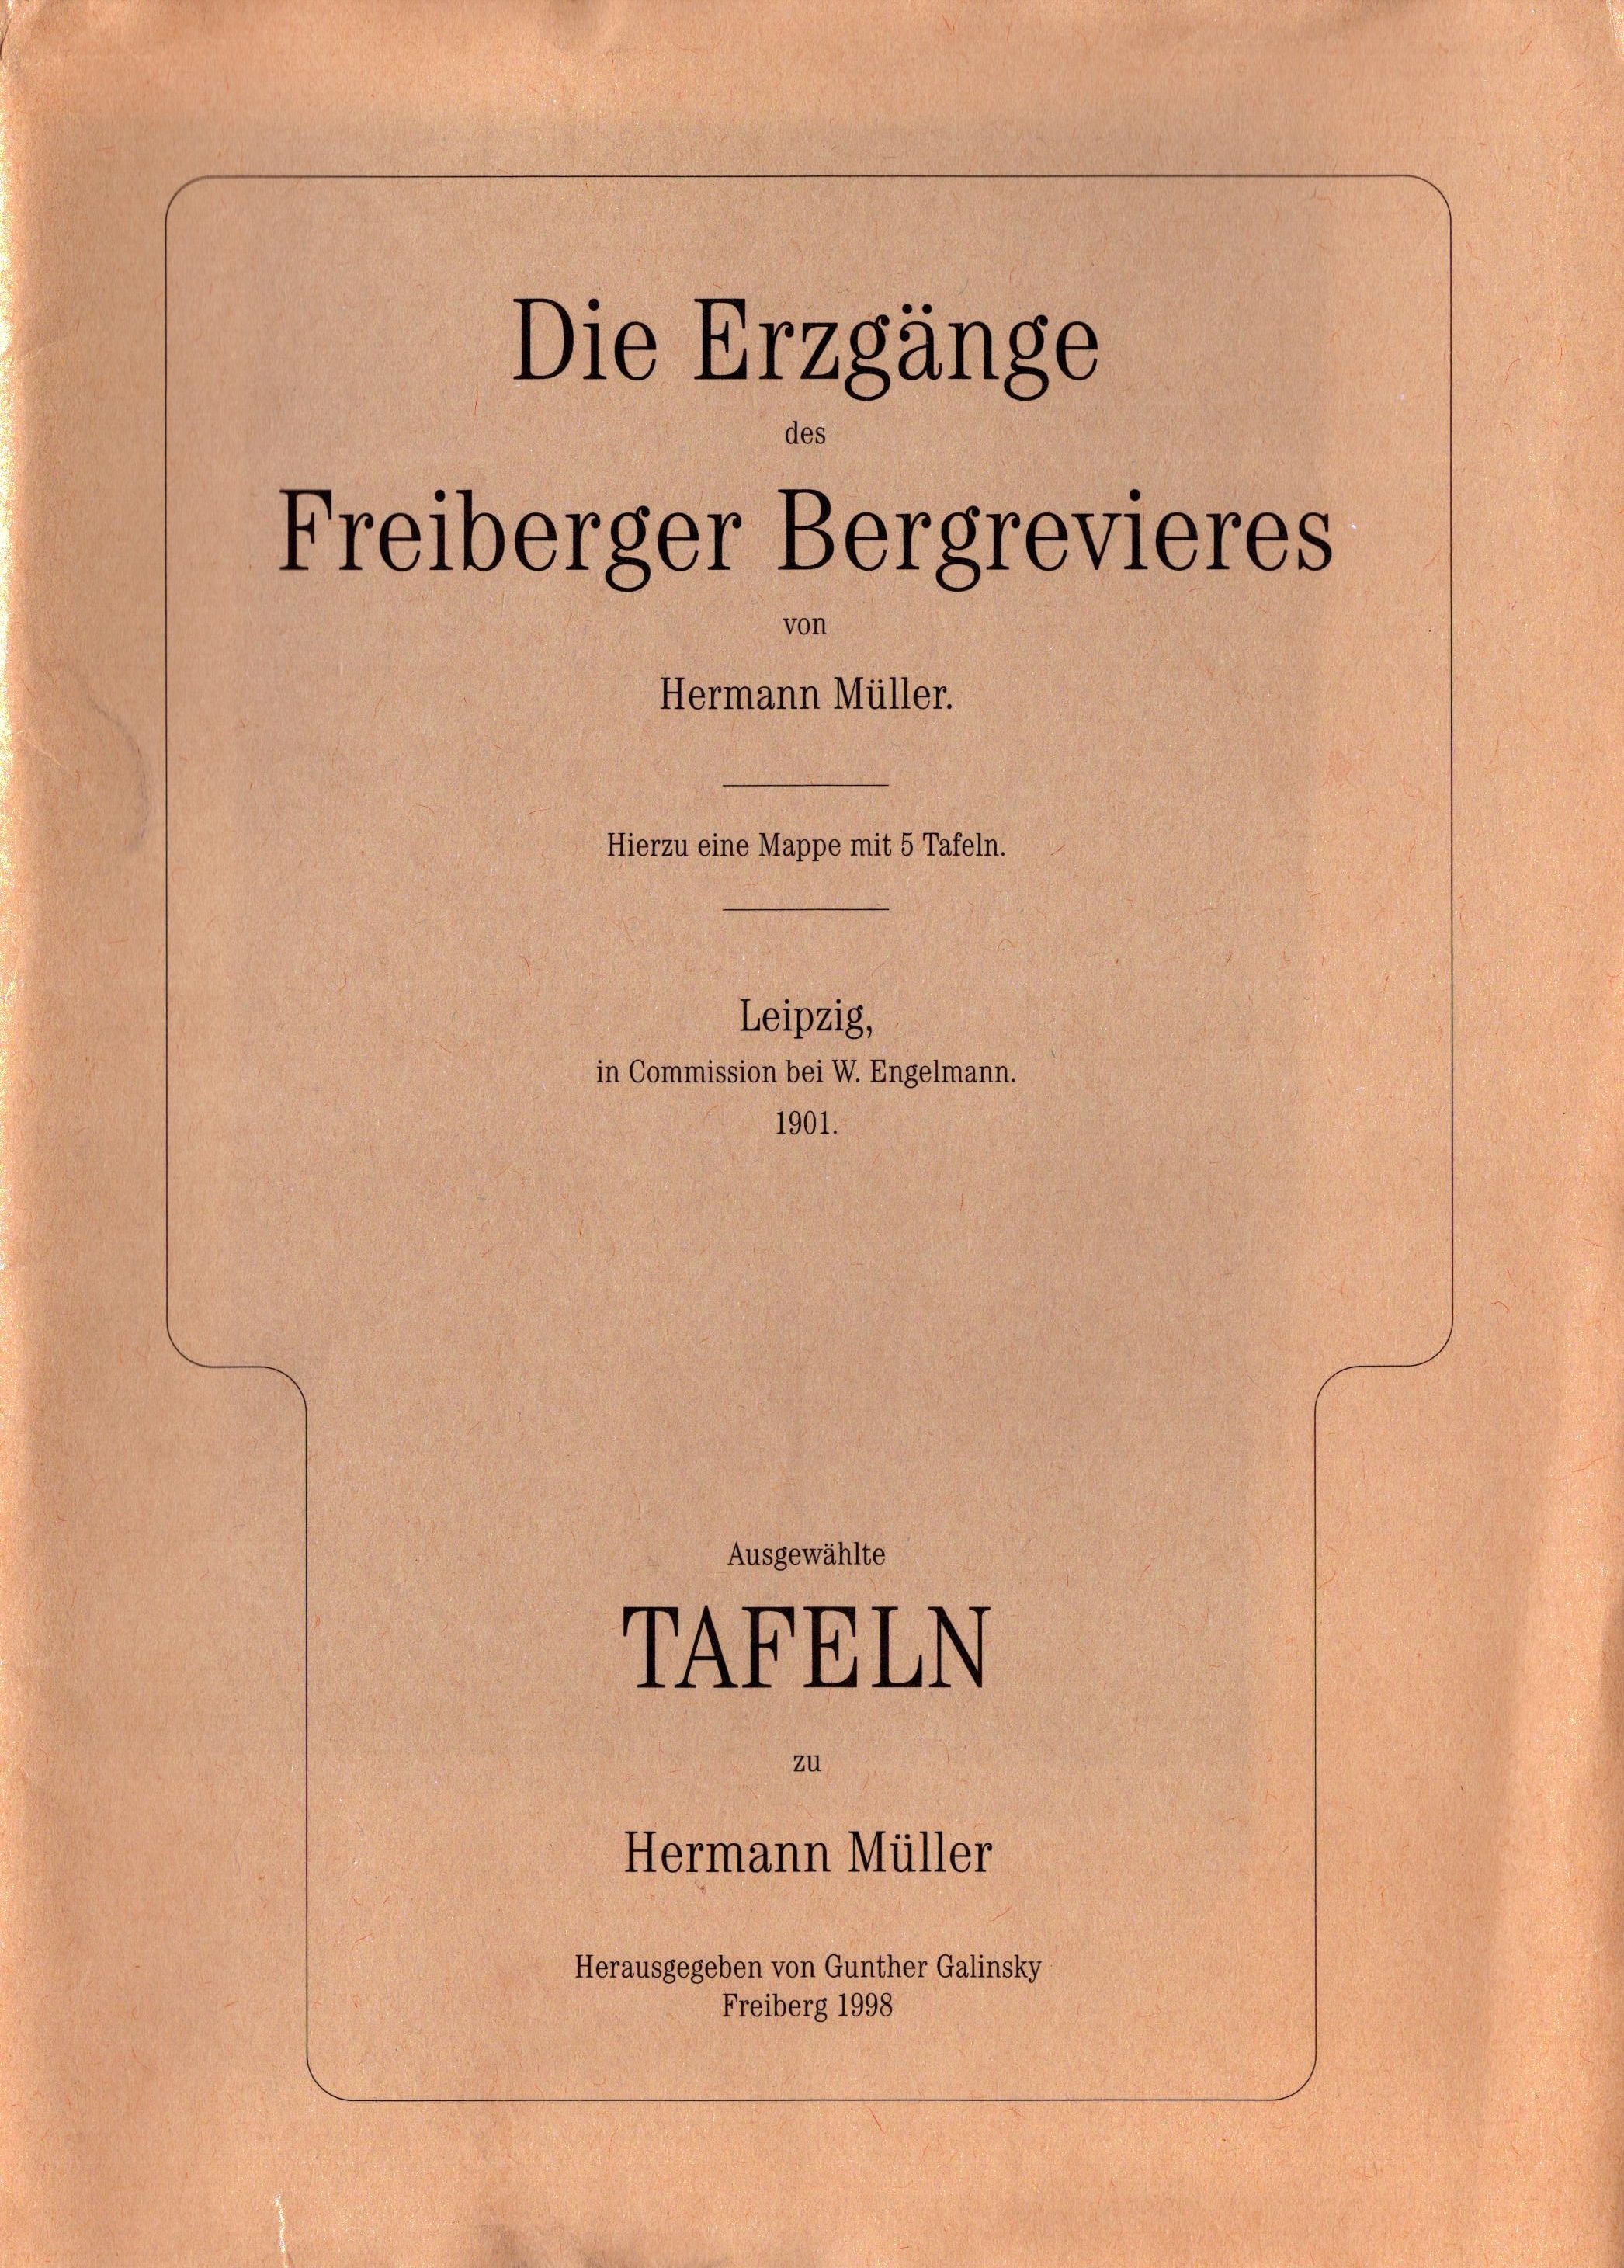 Die Erzgänge des Freiberger Bergrevieres (Archiv SAXONIA-FREIBERG-STIFTUNG CC BY-NC-SA)